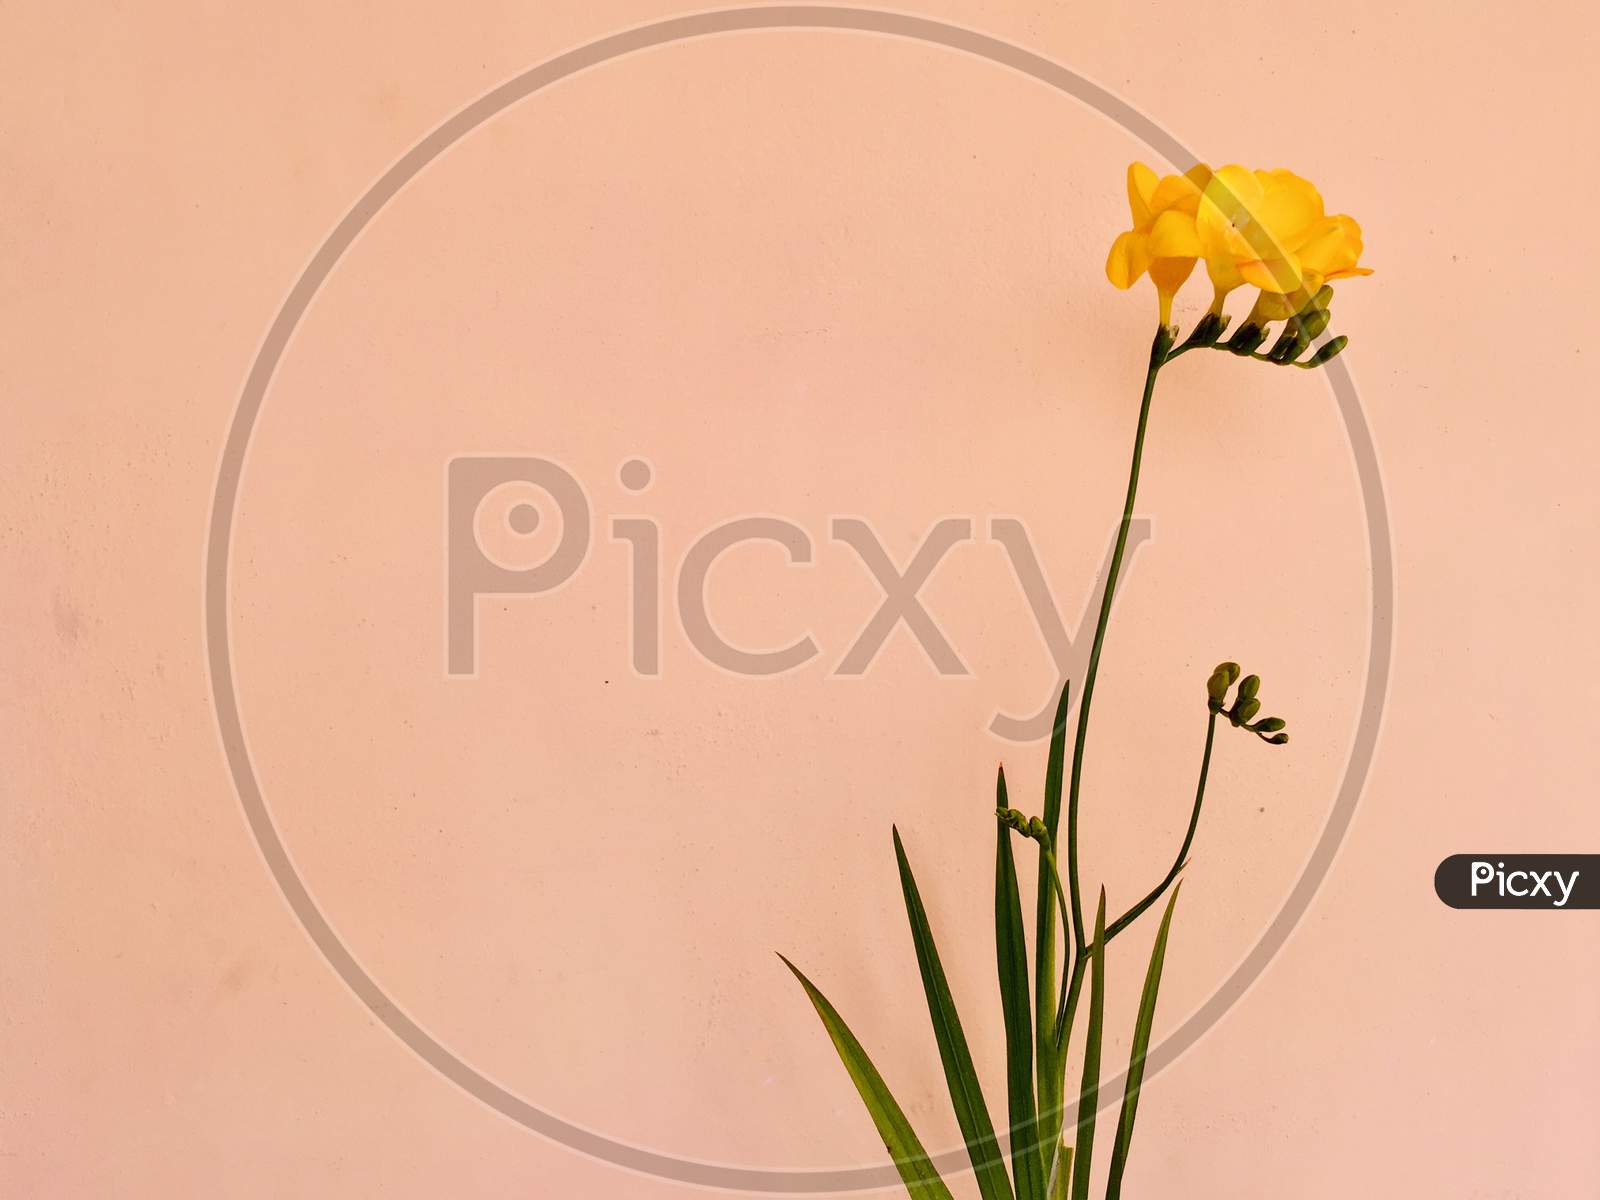 Yellow Freesia flower